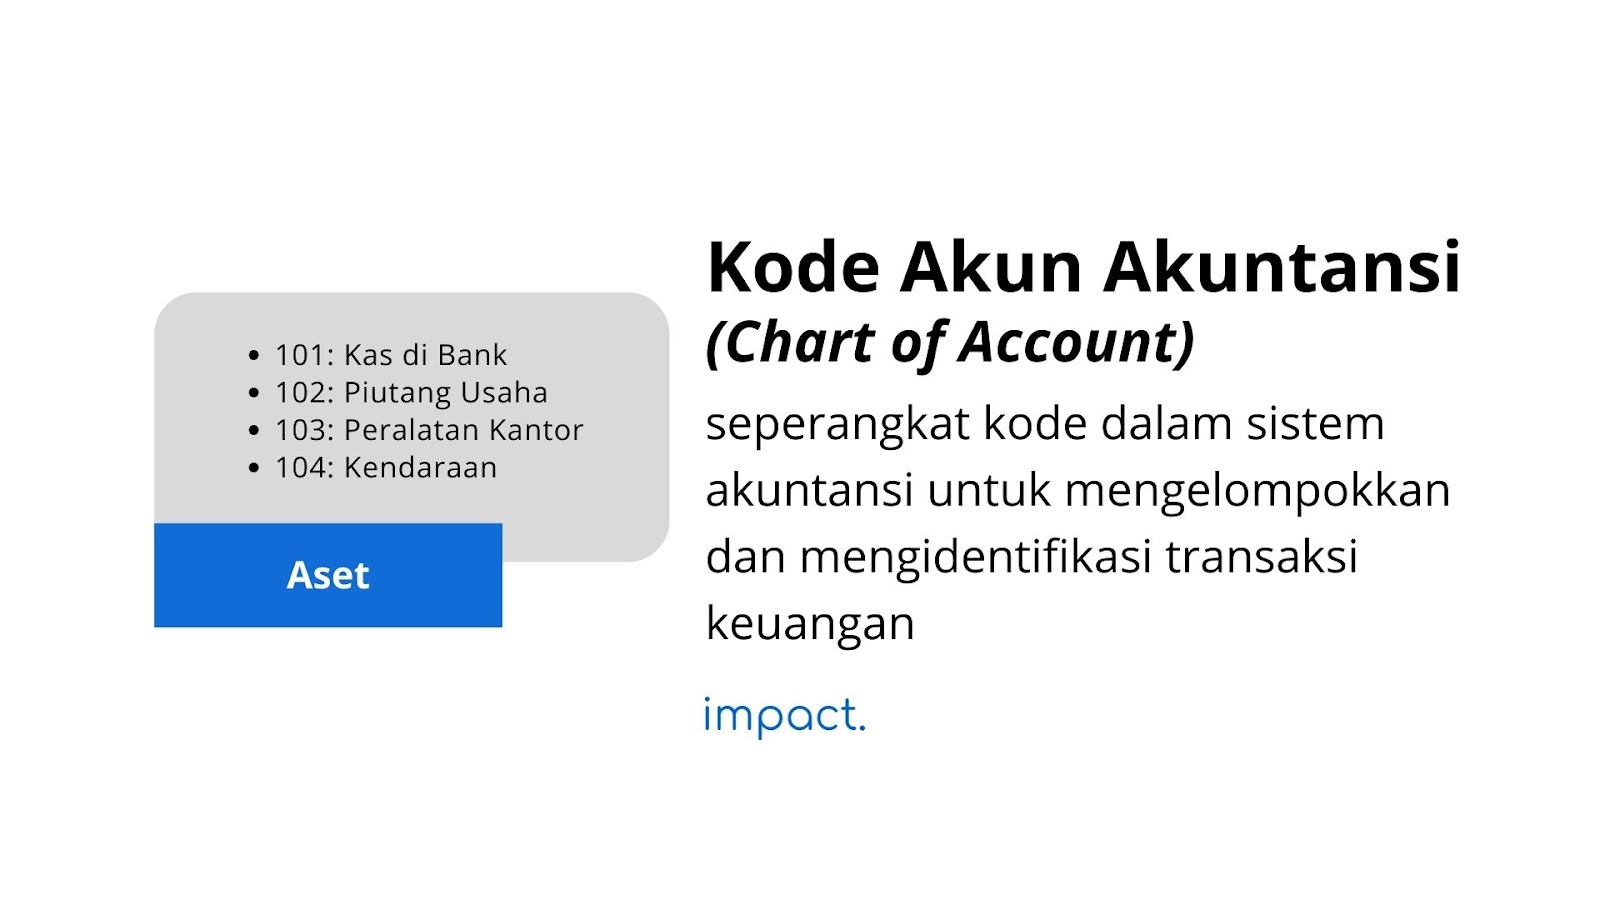 Kode Akun Akuntansi (Chart of Account)